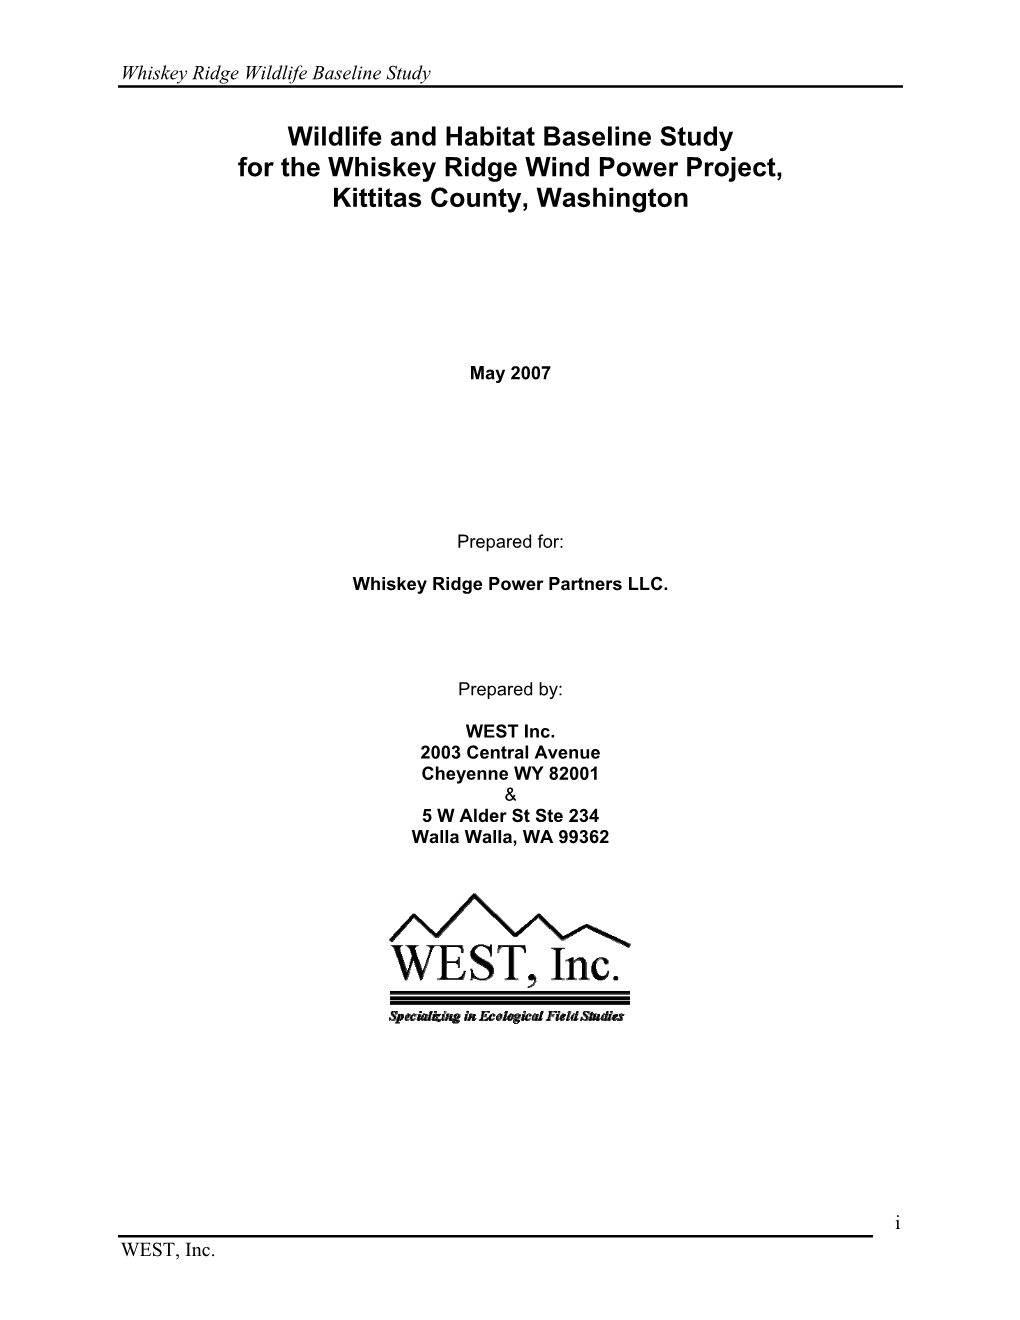 Wildlife and Habitat Baseline Study for the Whiskey Ridge Wind Power Project, Kittitas County, Washington